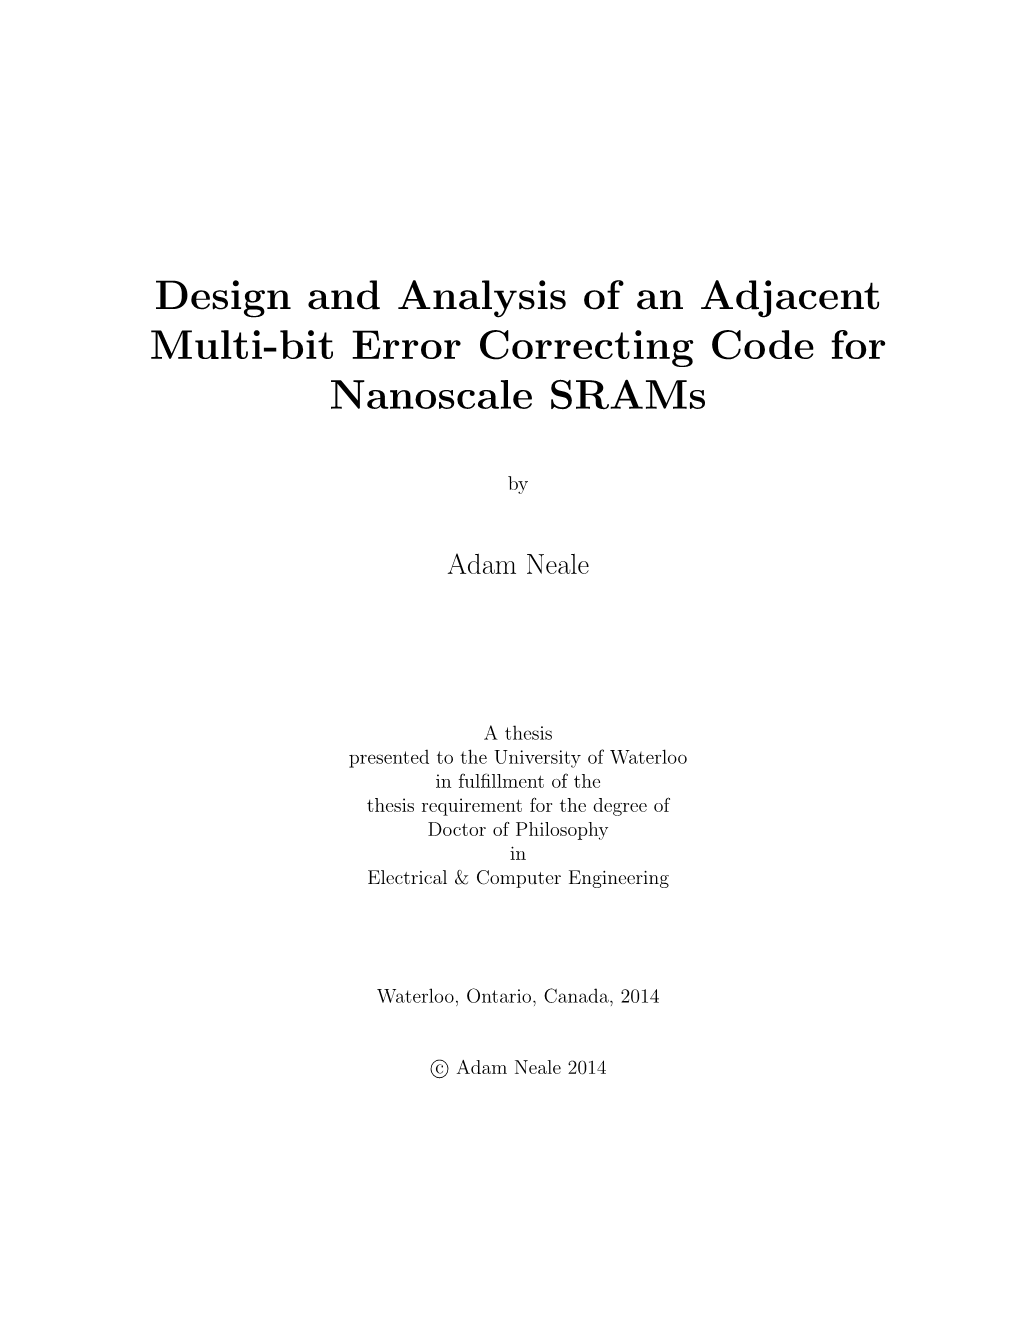 Design and Analysis of an Adjacent Multi-Bit Error Correcting Code for Nanoscale Srams